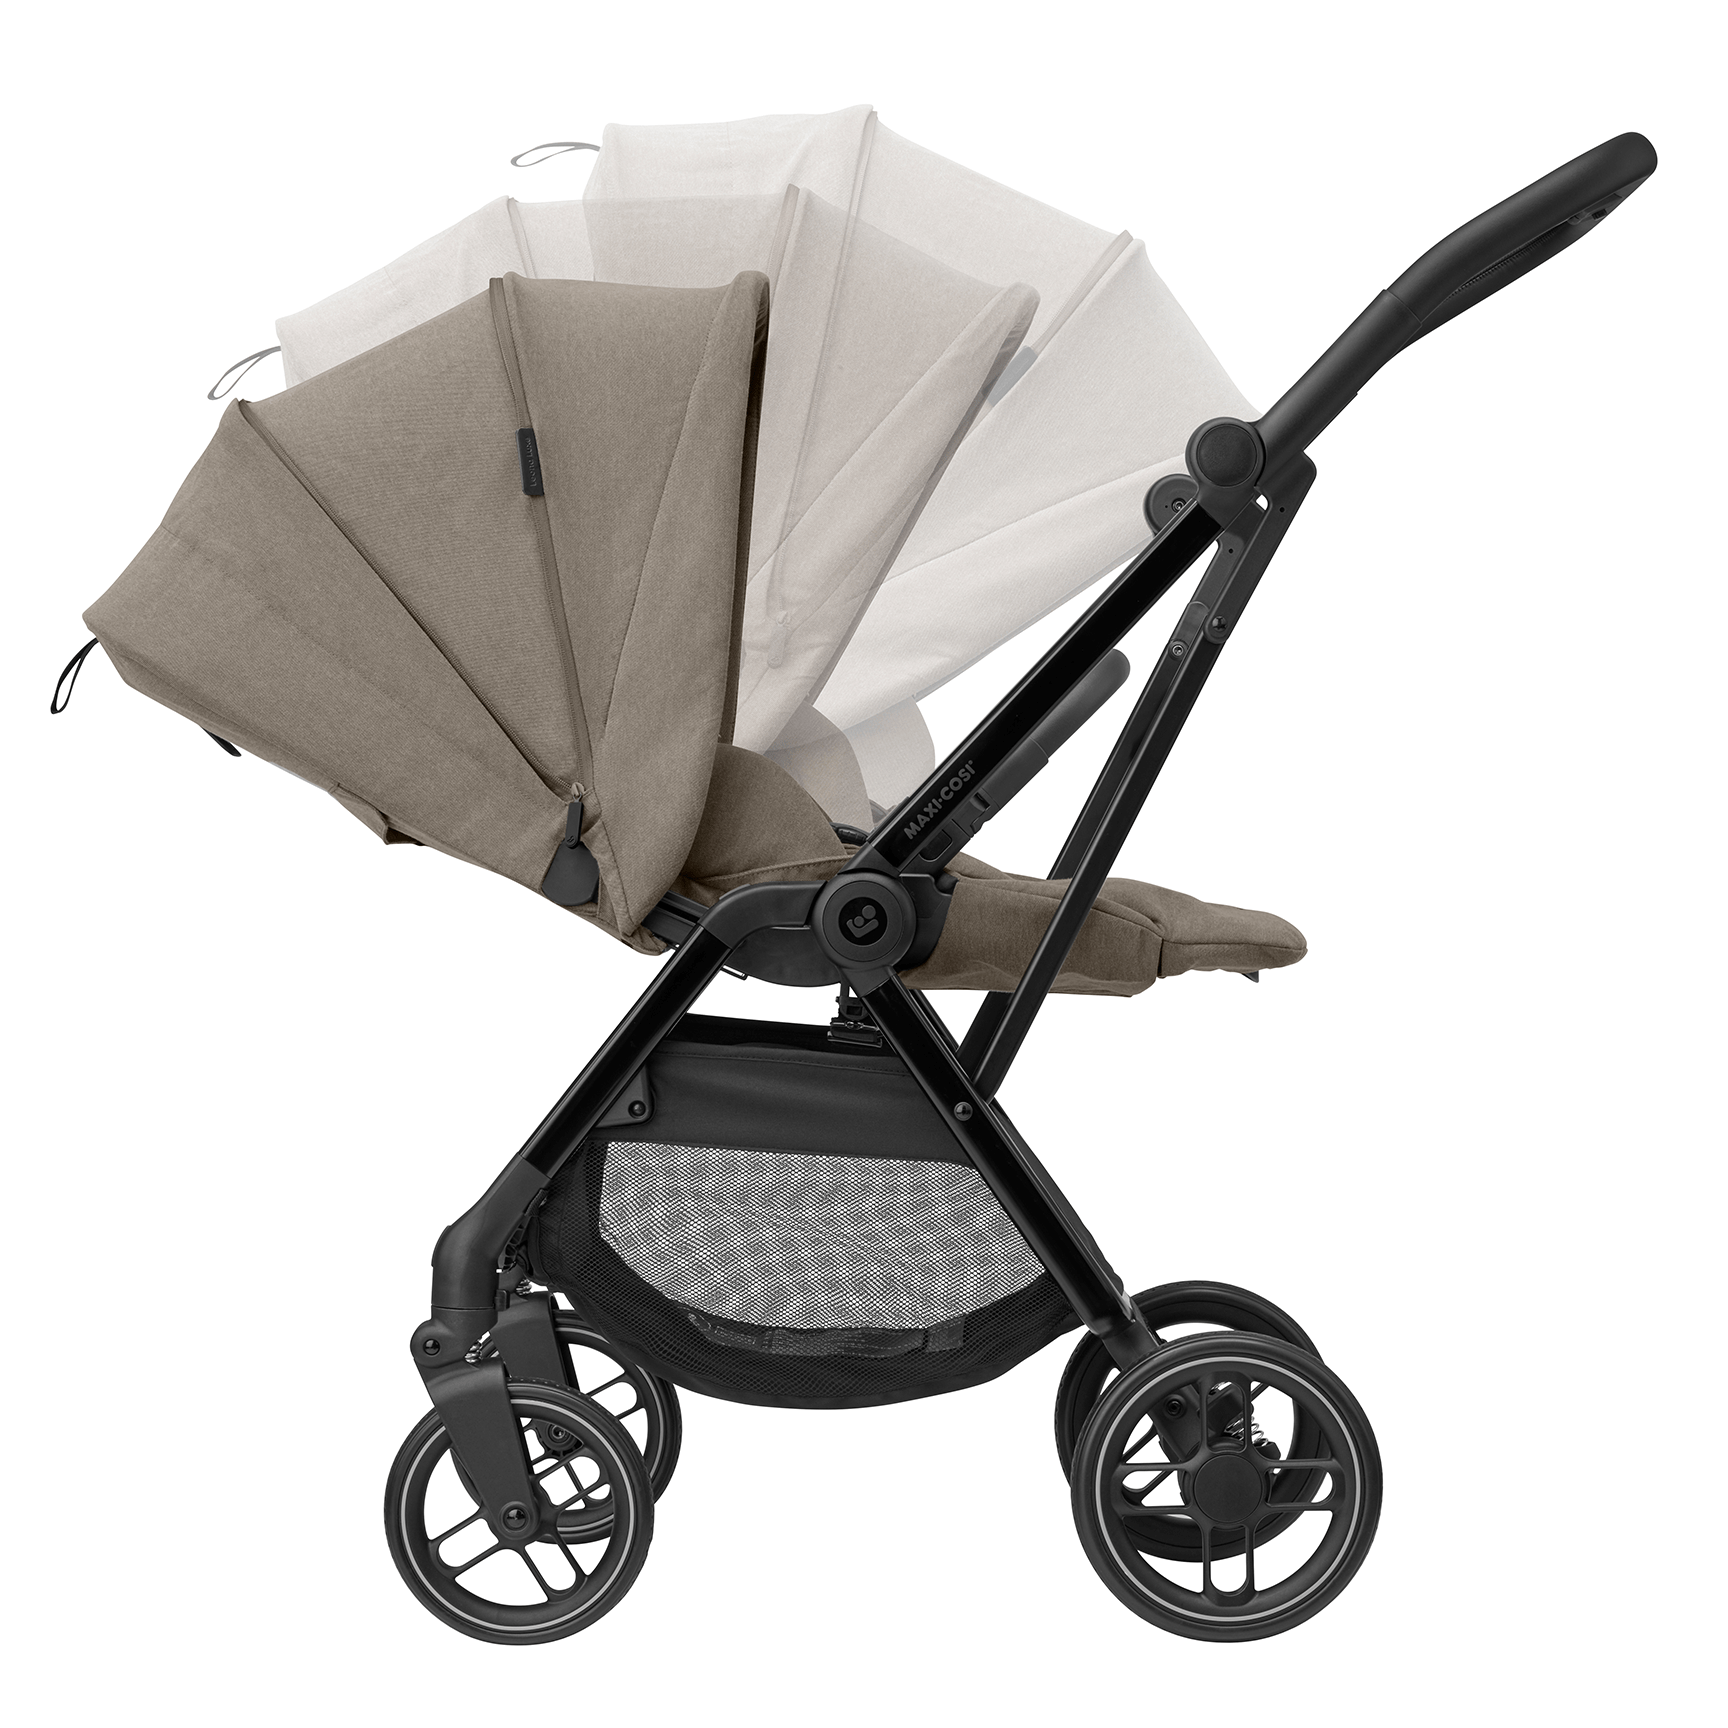 Maxi-Cosi baby pushchairs Maxi-Cosi Leona Luxe Stroller - Truffle 1204470300